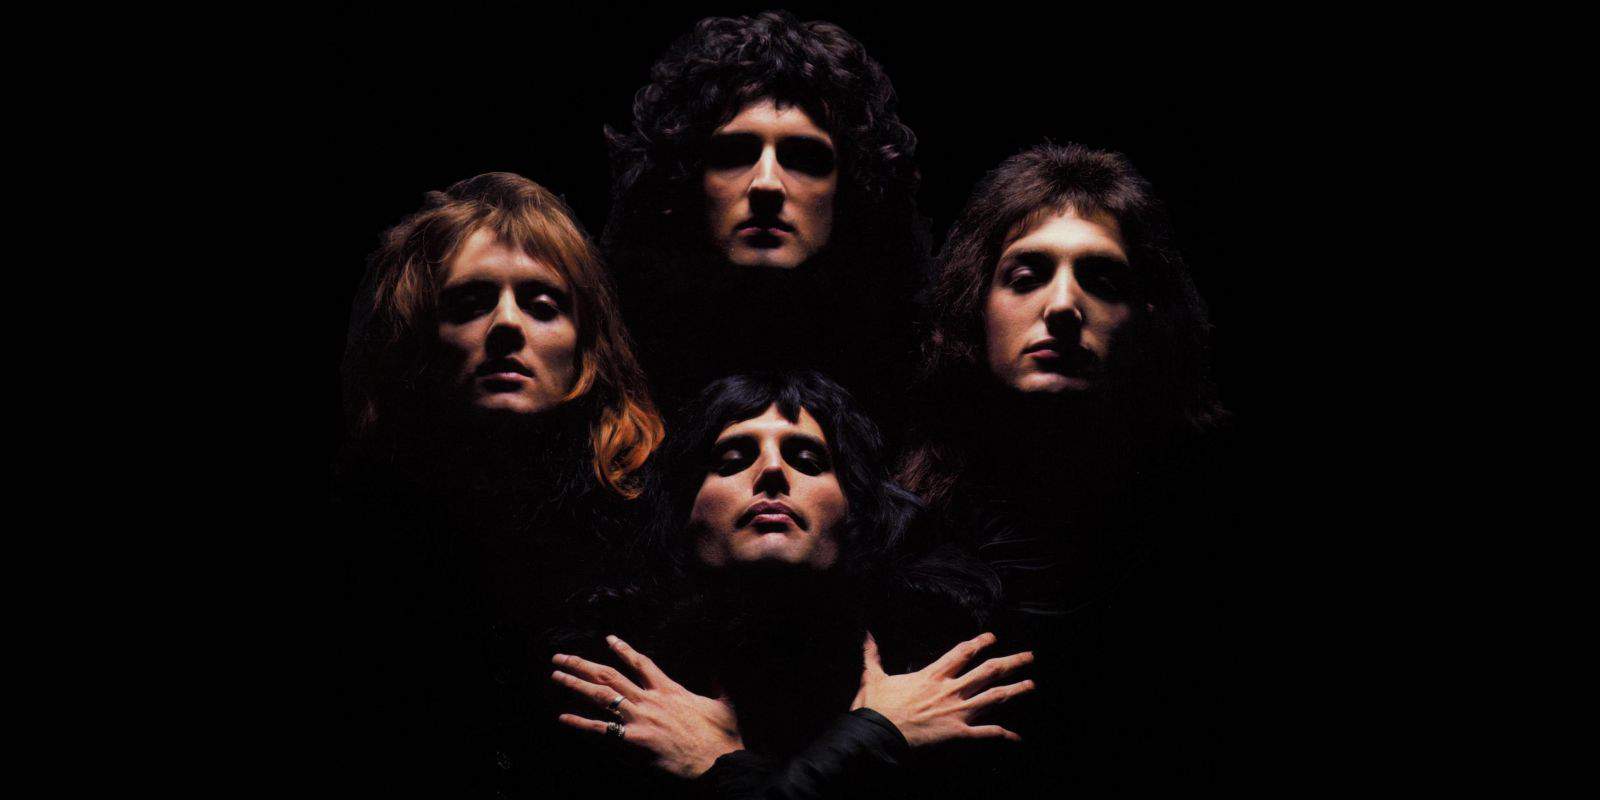 Bohemian Rhapsody - song weird lyrics